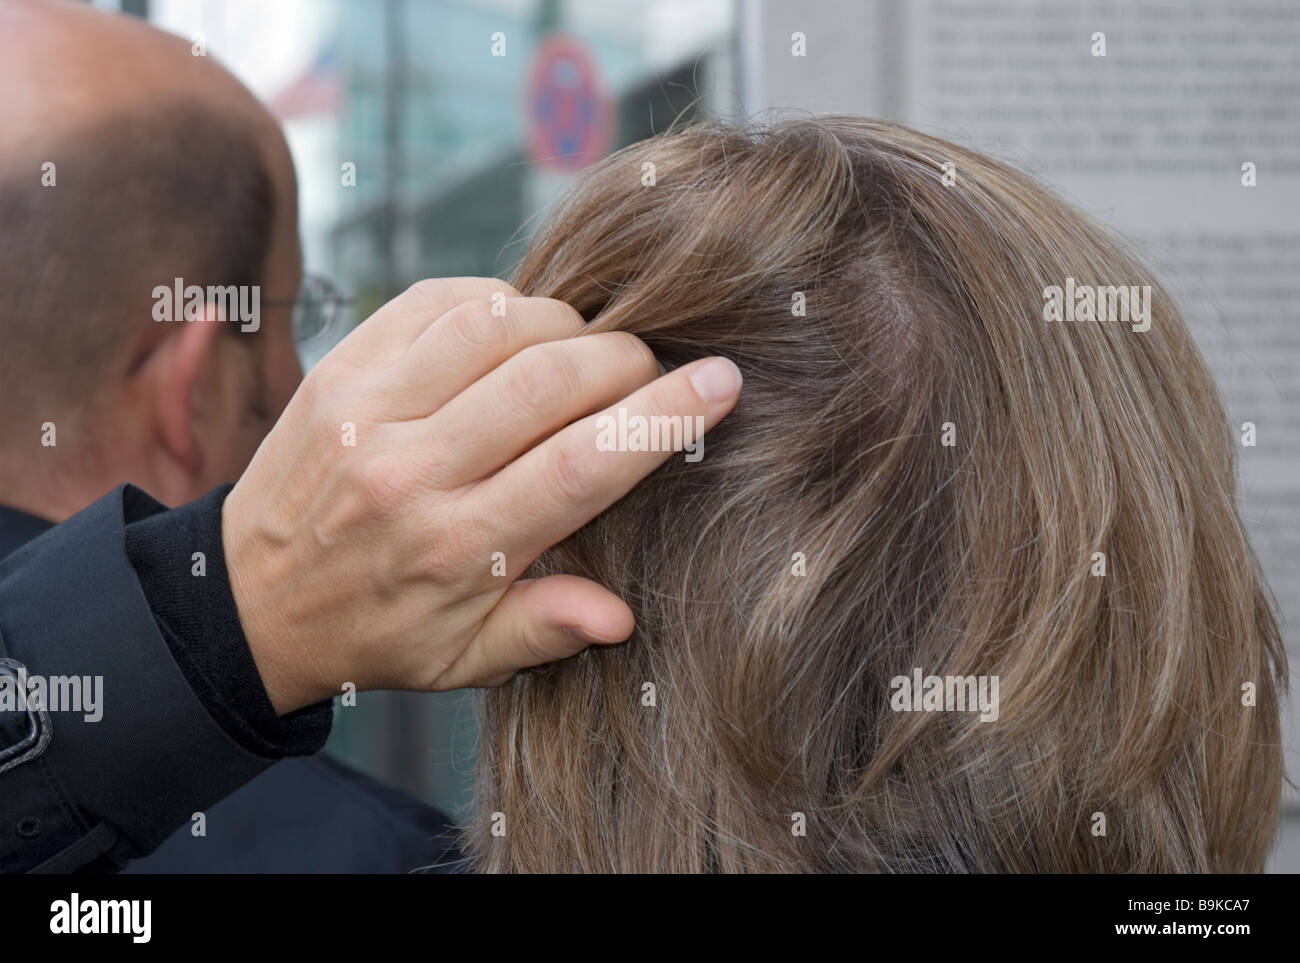 woman touching her head Stock Photo